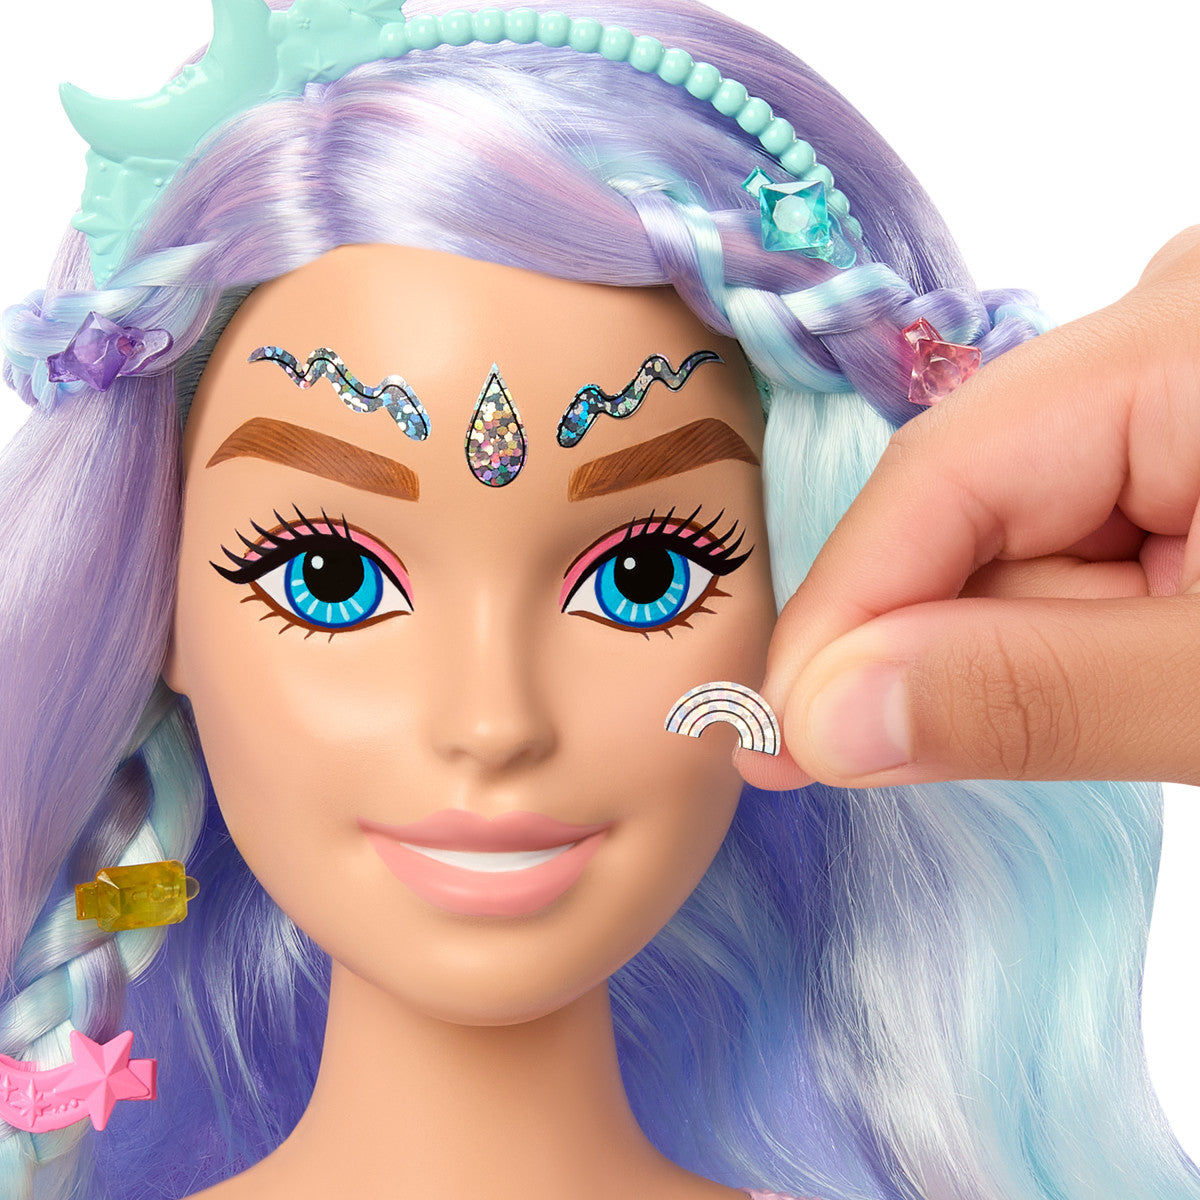 Barbie: Barbie Cuento De Hadas